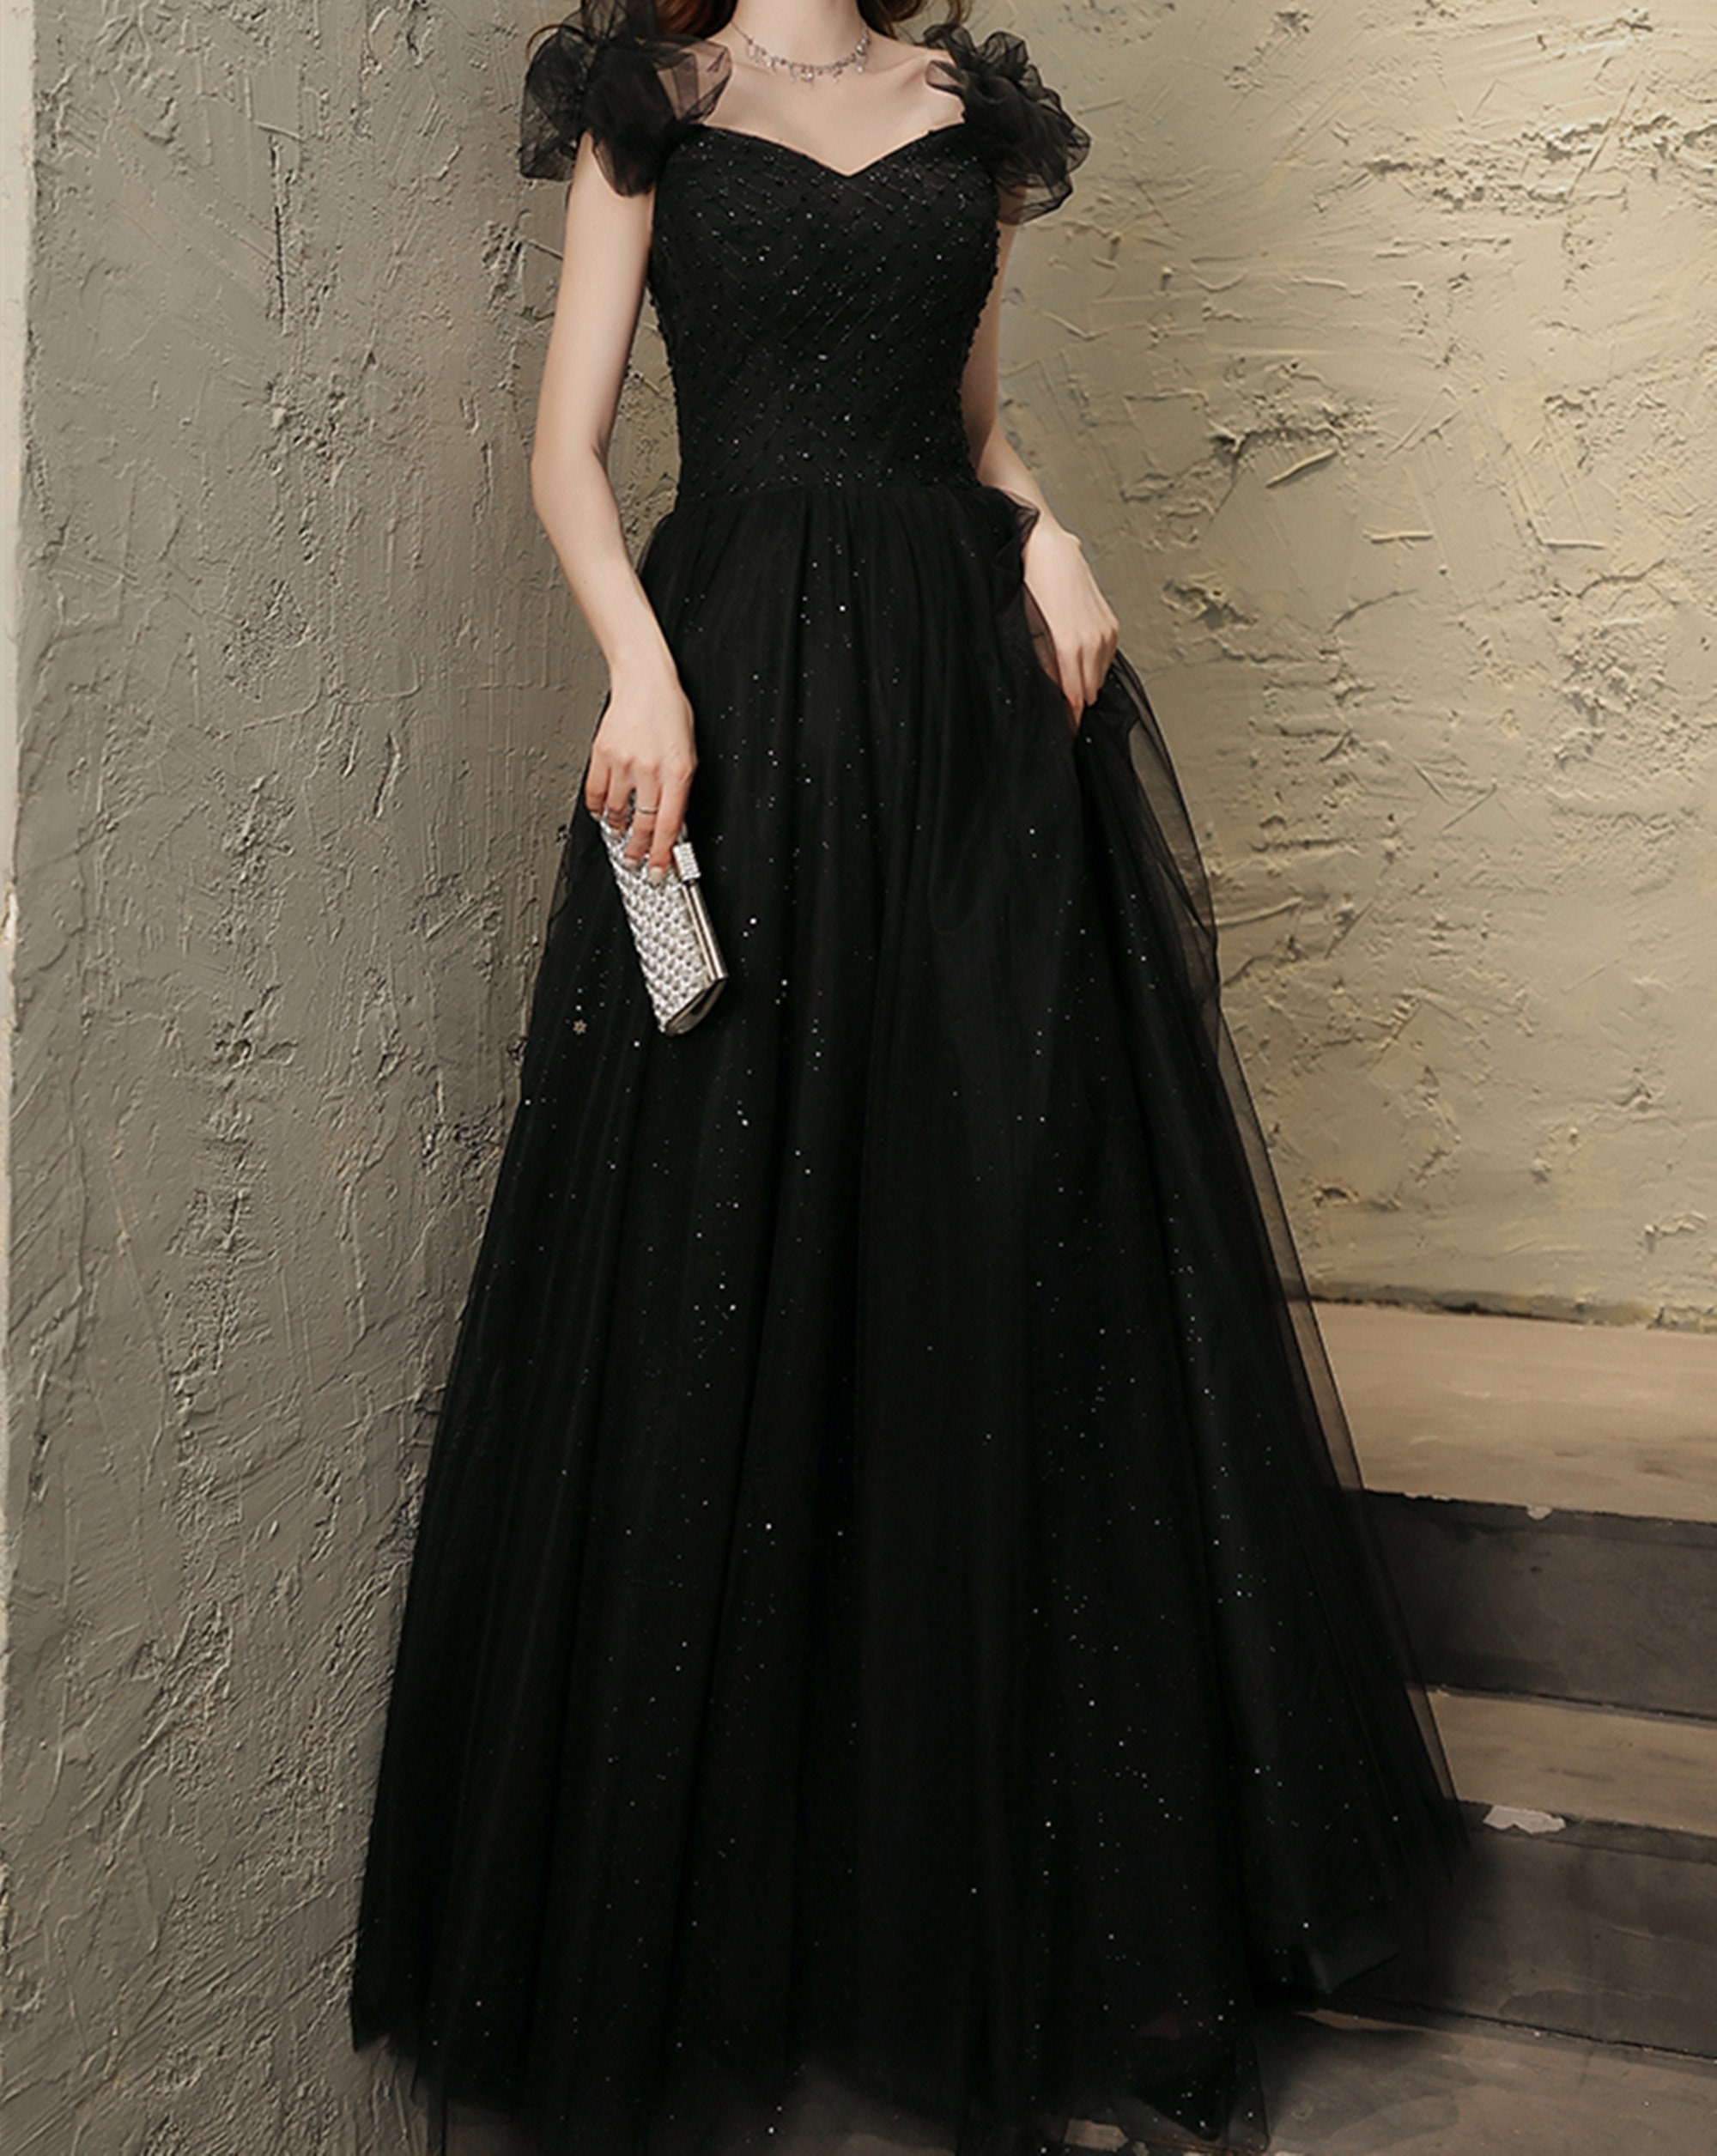 Black Starry Prom Dress Girl Sparkly Party Dress Sleeveless - Etsy